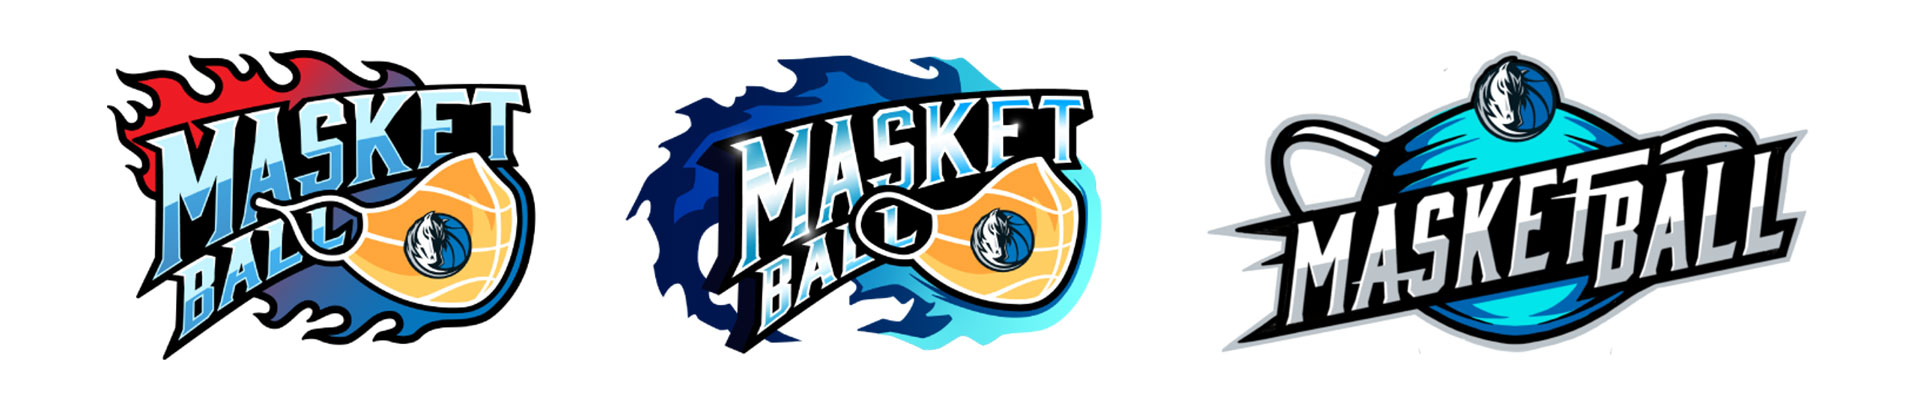 Dallas Mavs Masketball logo